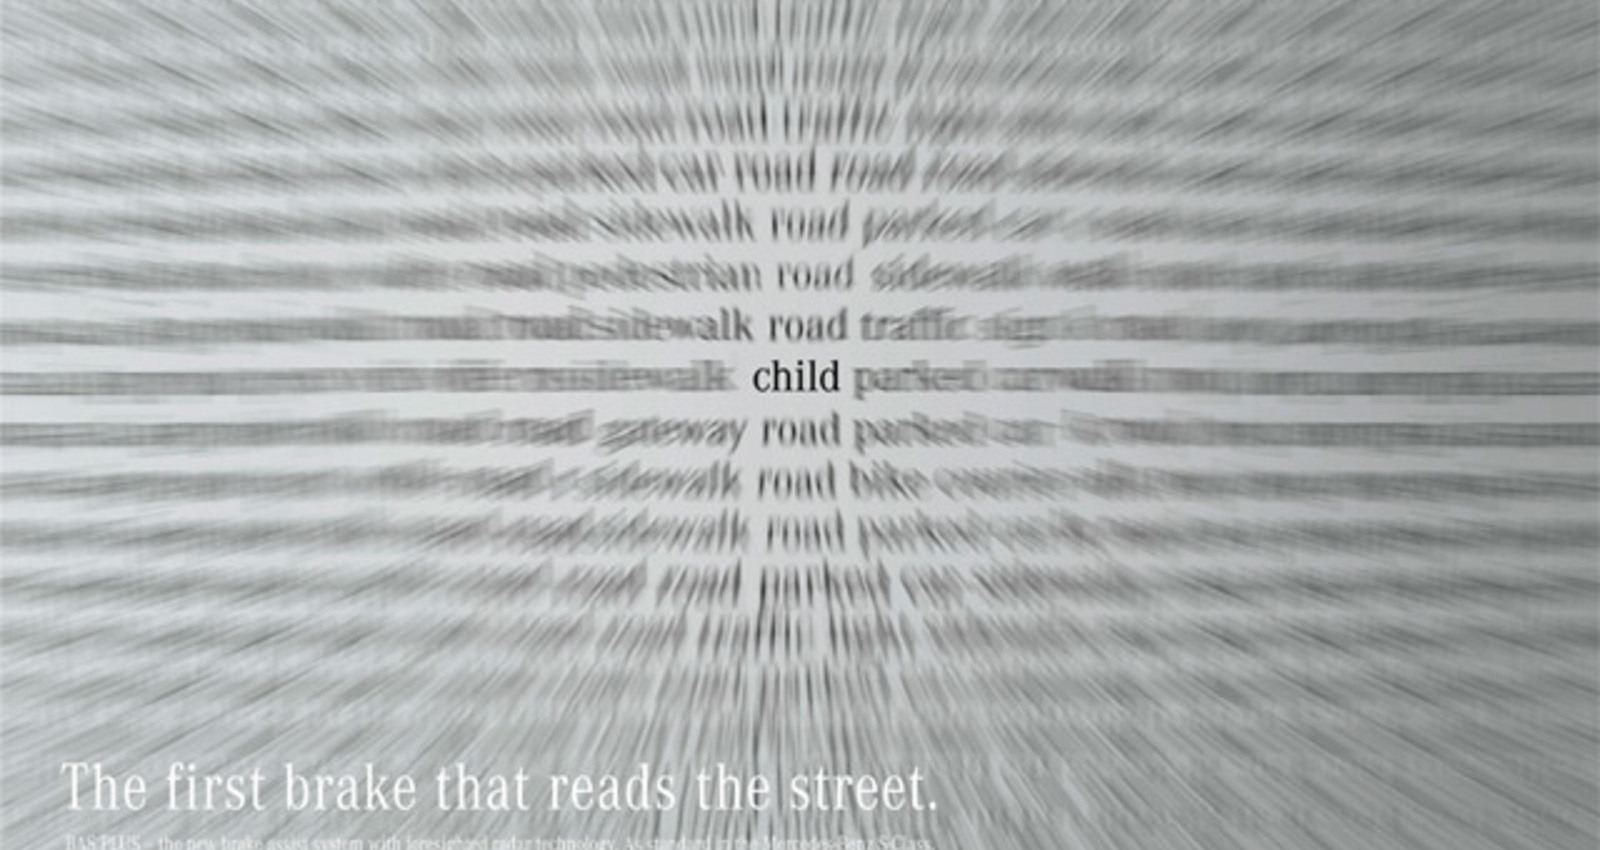 Read the street